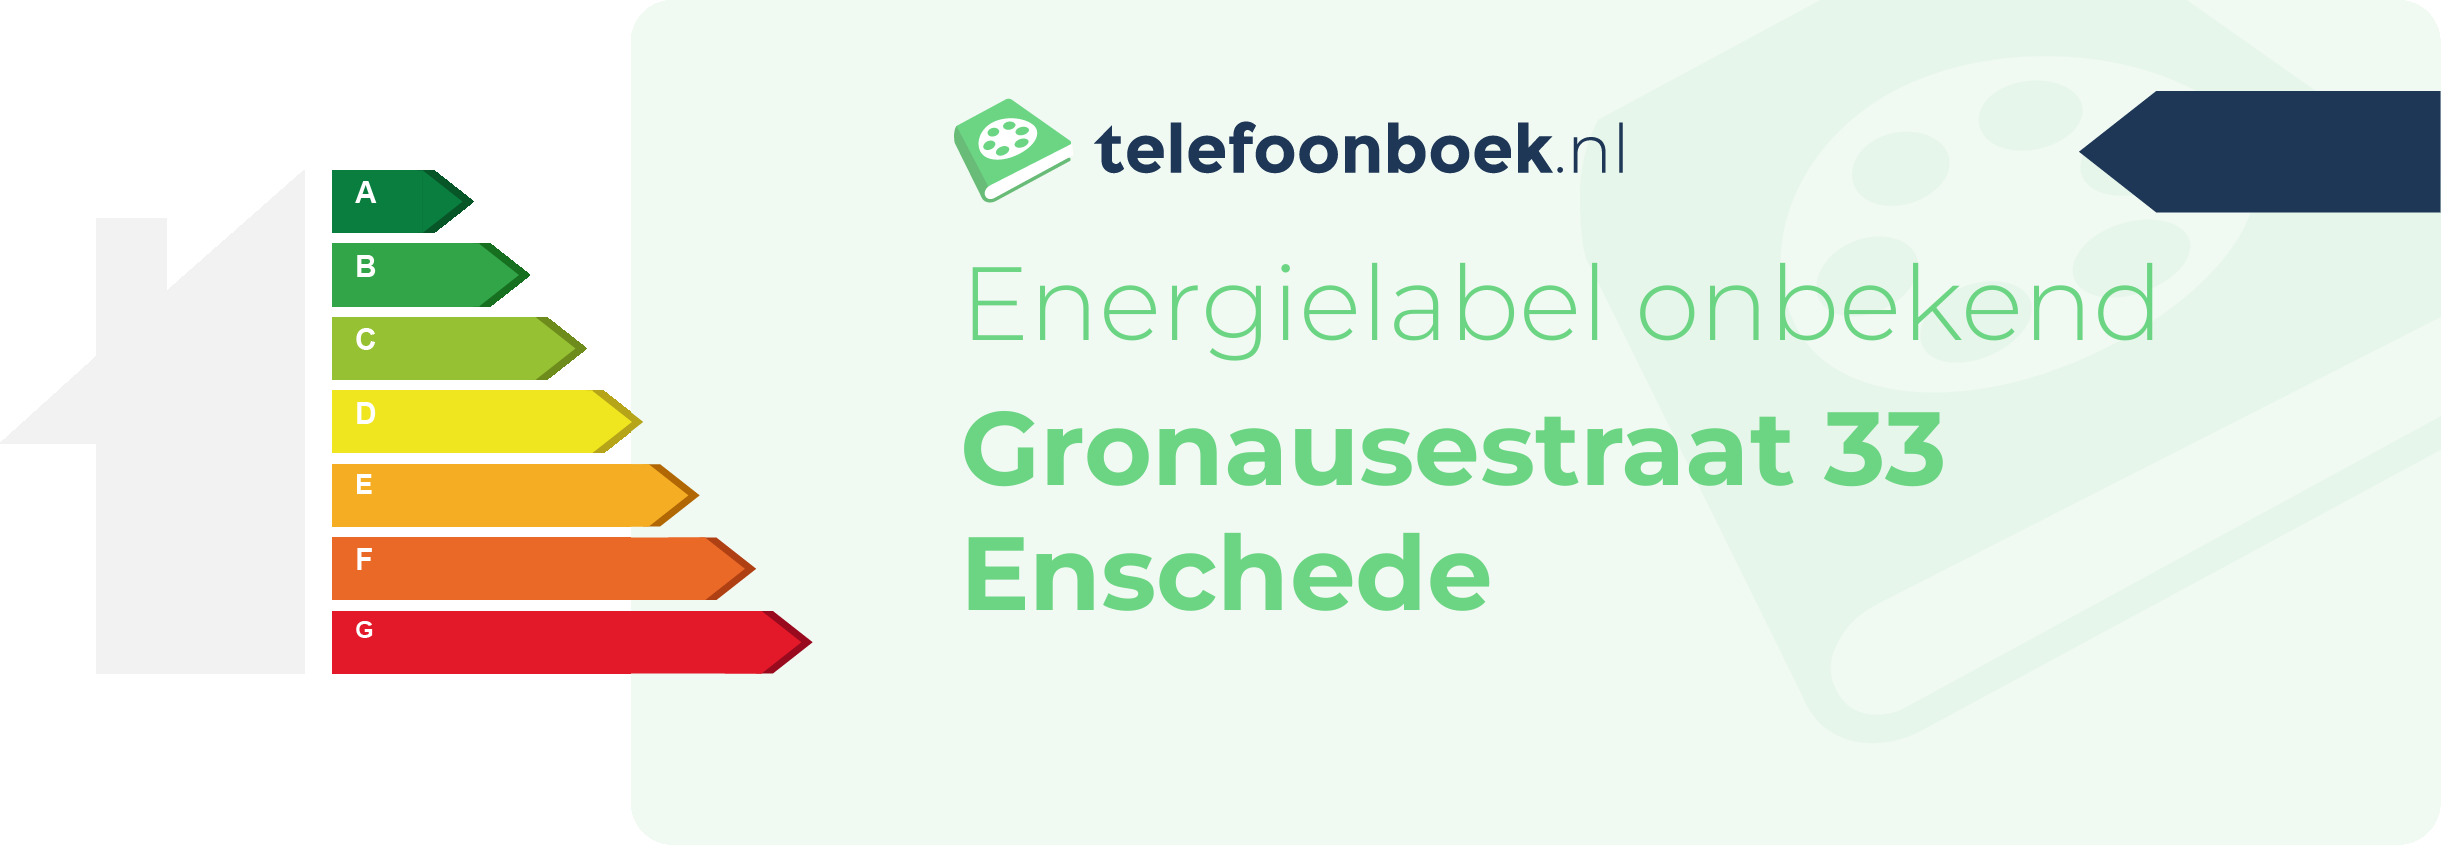 Energielabel Gronausestraat 33 Enschede